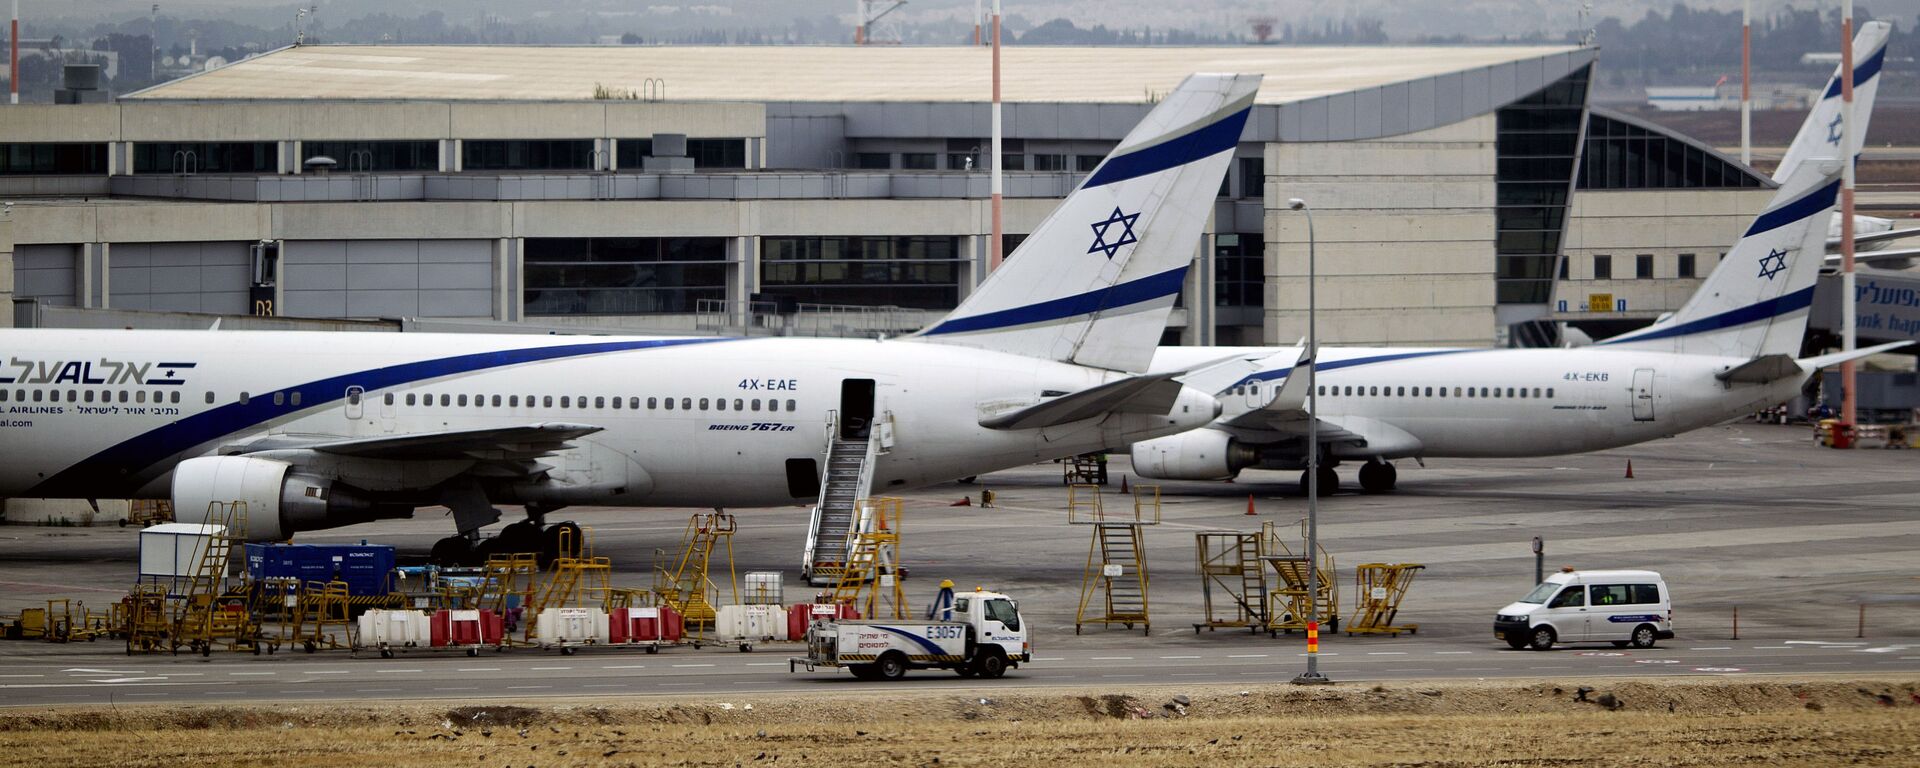 مطار بن غوريون الدولي في تل أبيب، إسرائيل 21 أبريل/ نيسان 2013 - سبوتنيك عربي, 1920, 23.03.2022